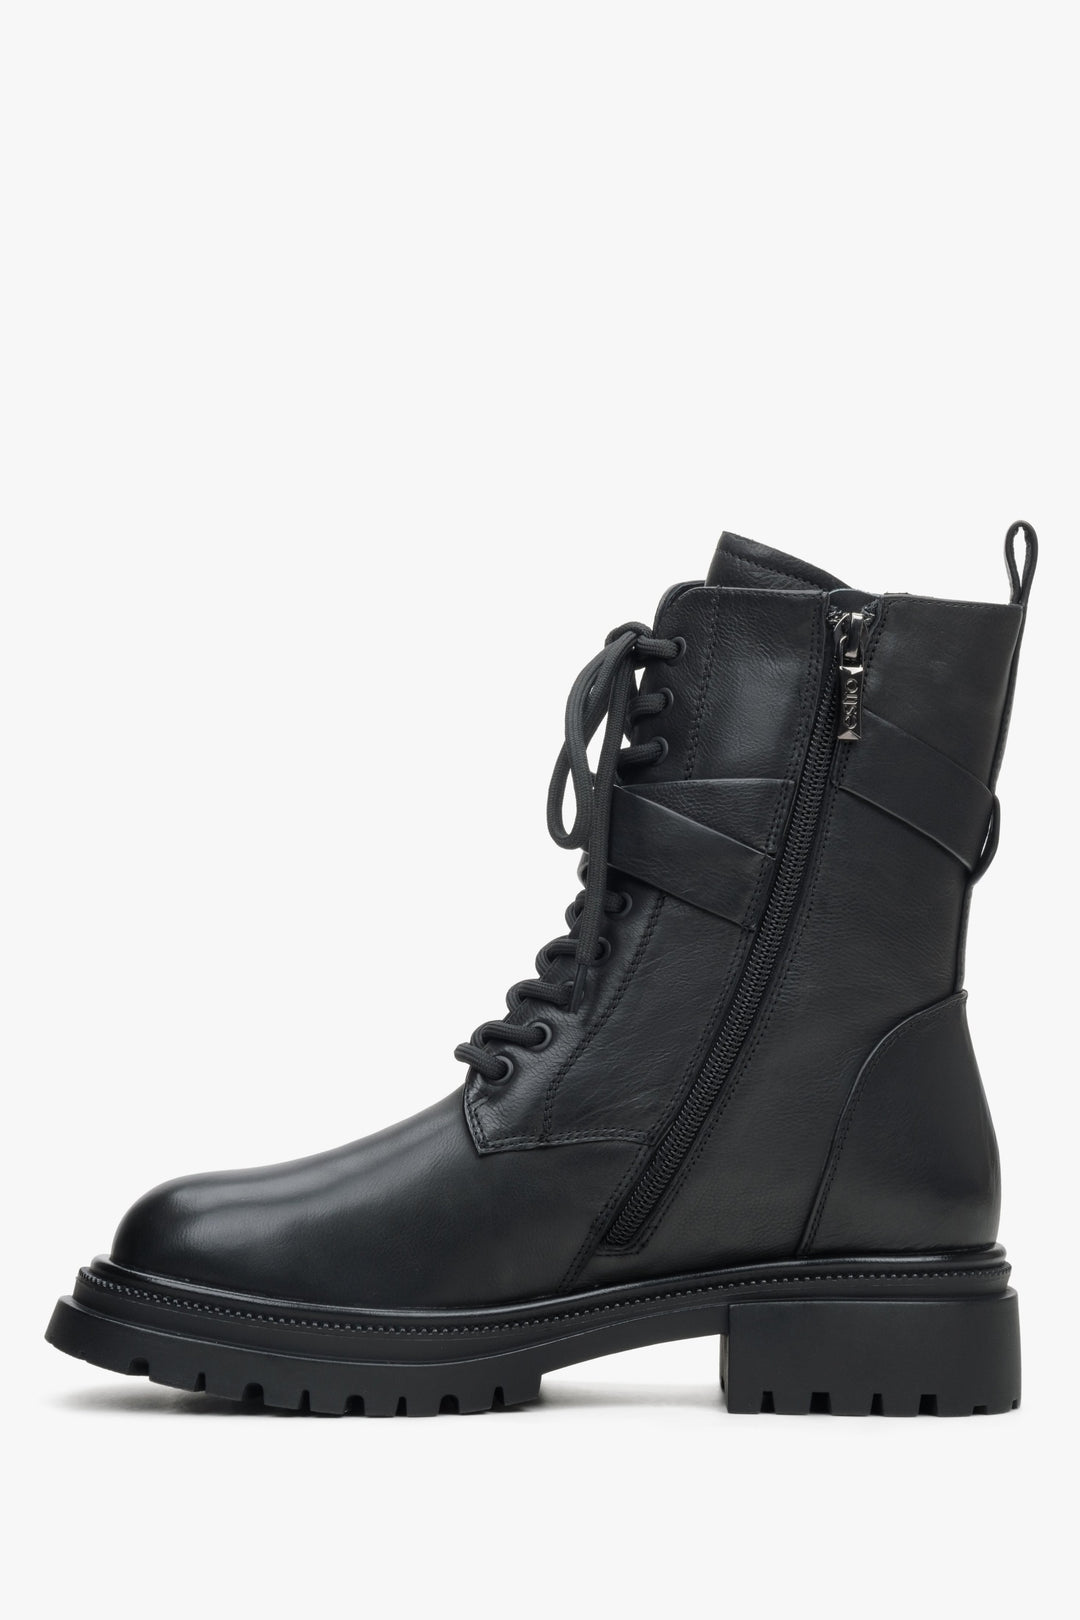 Women's black leather winter boots - shoe profile.